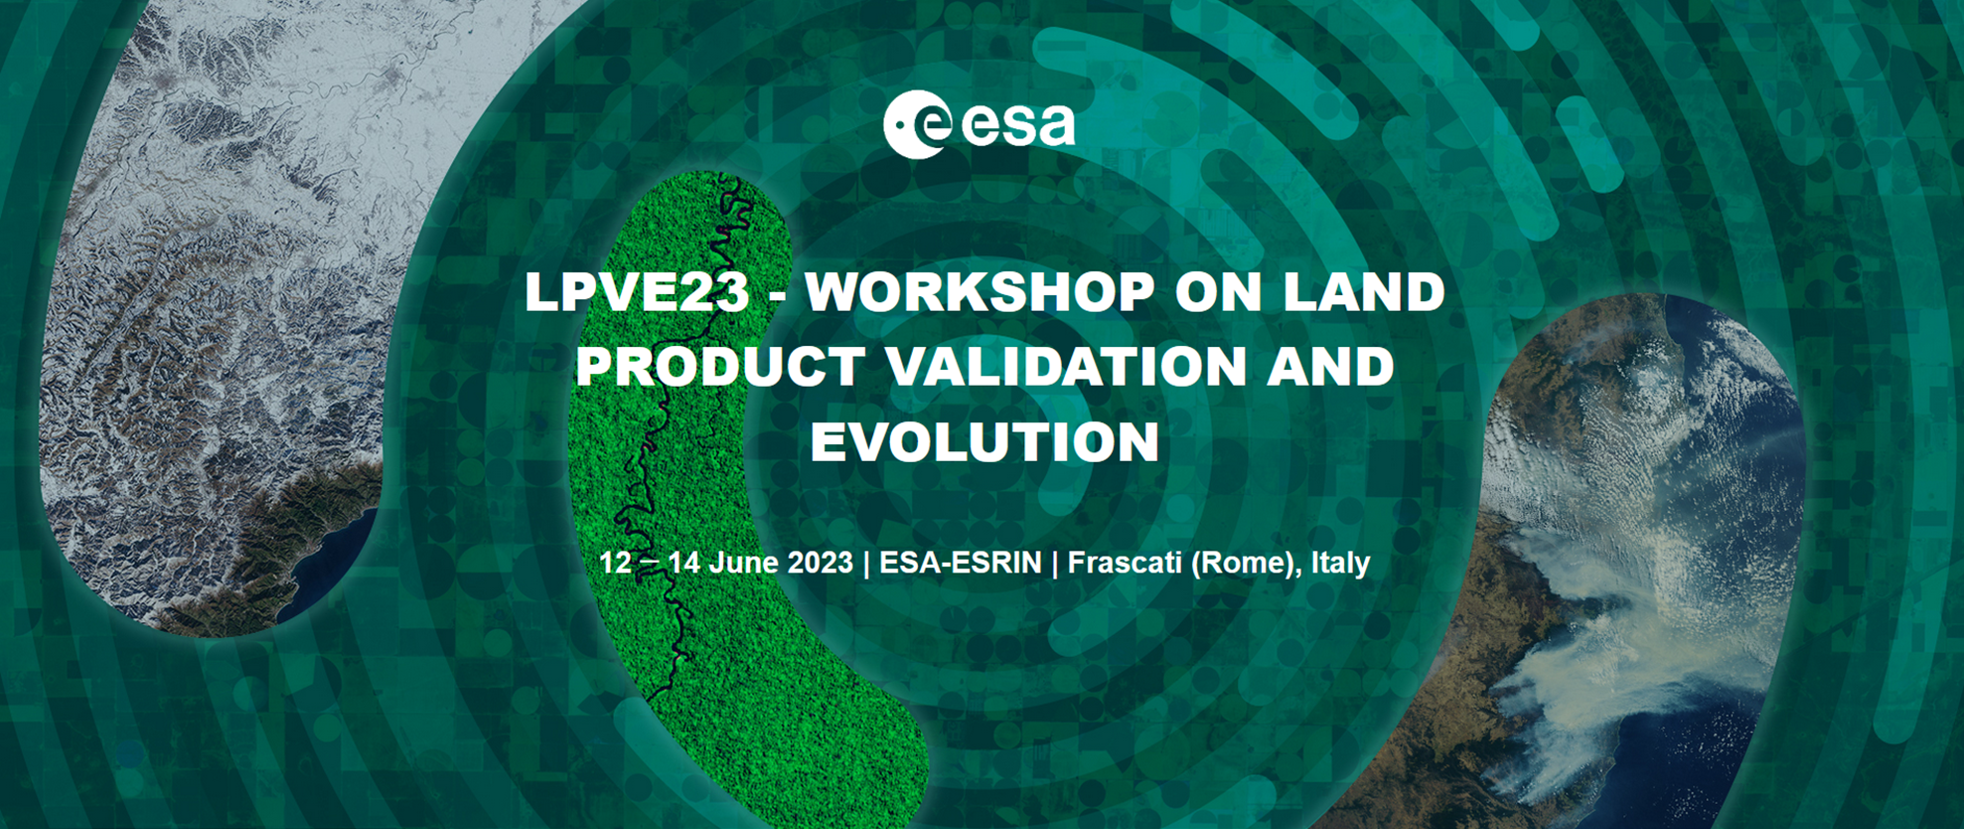 the 2023 Workshop on Land Product Validation and Evolution (LPVE23)